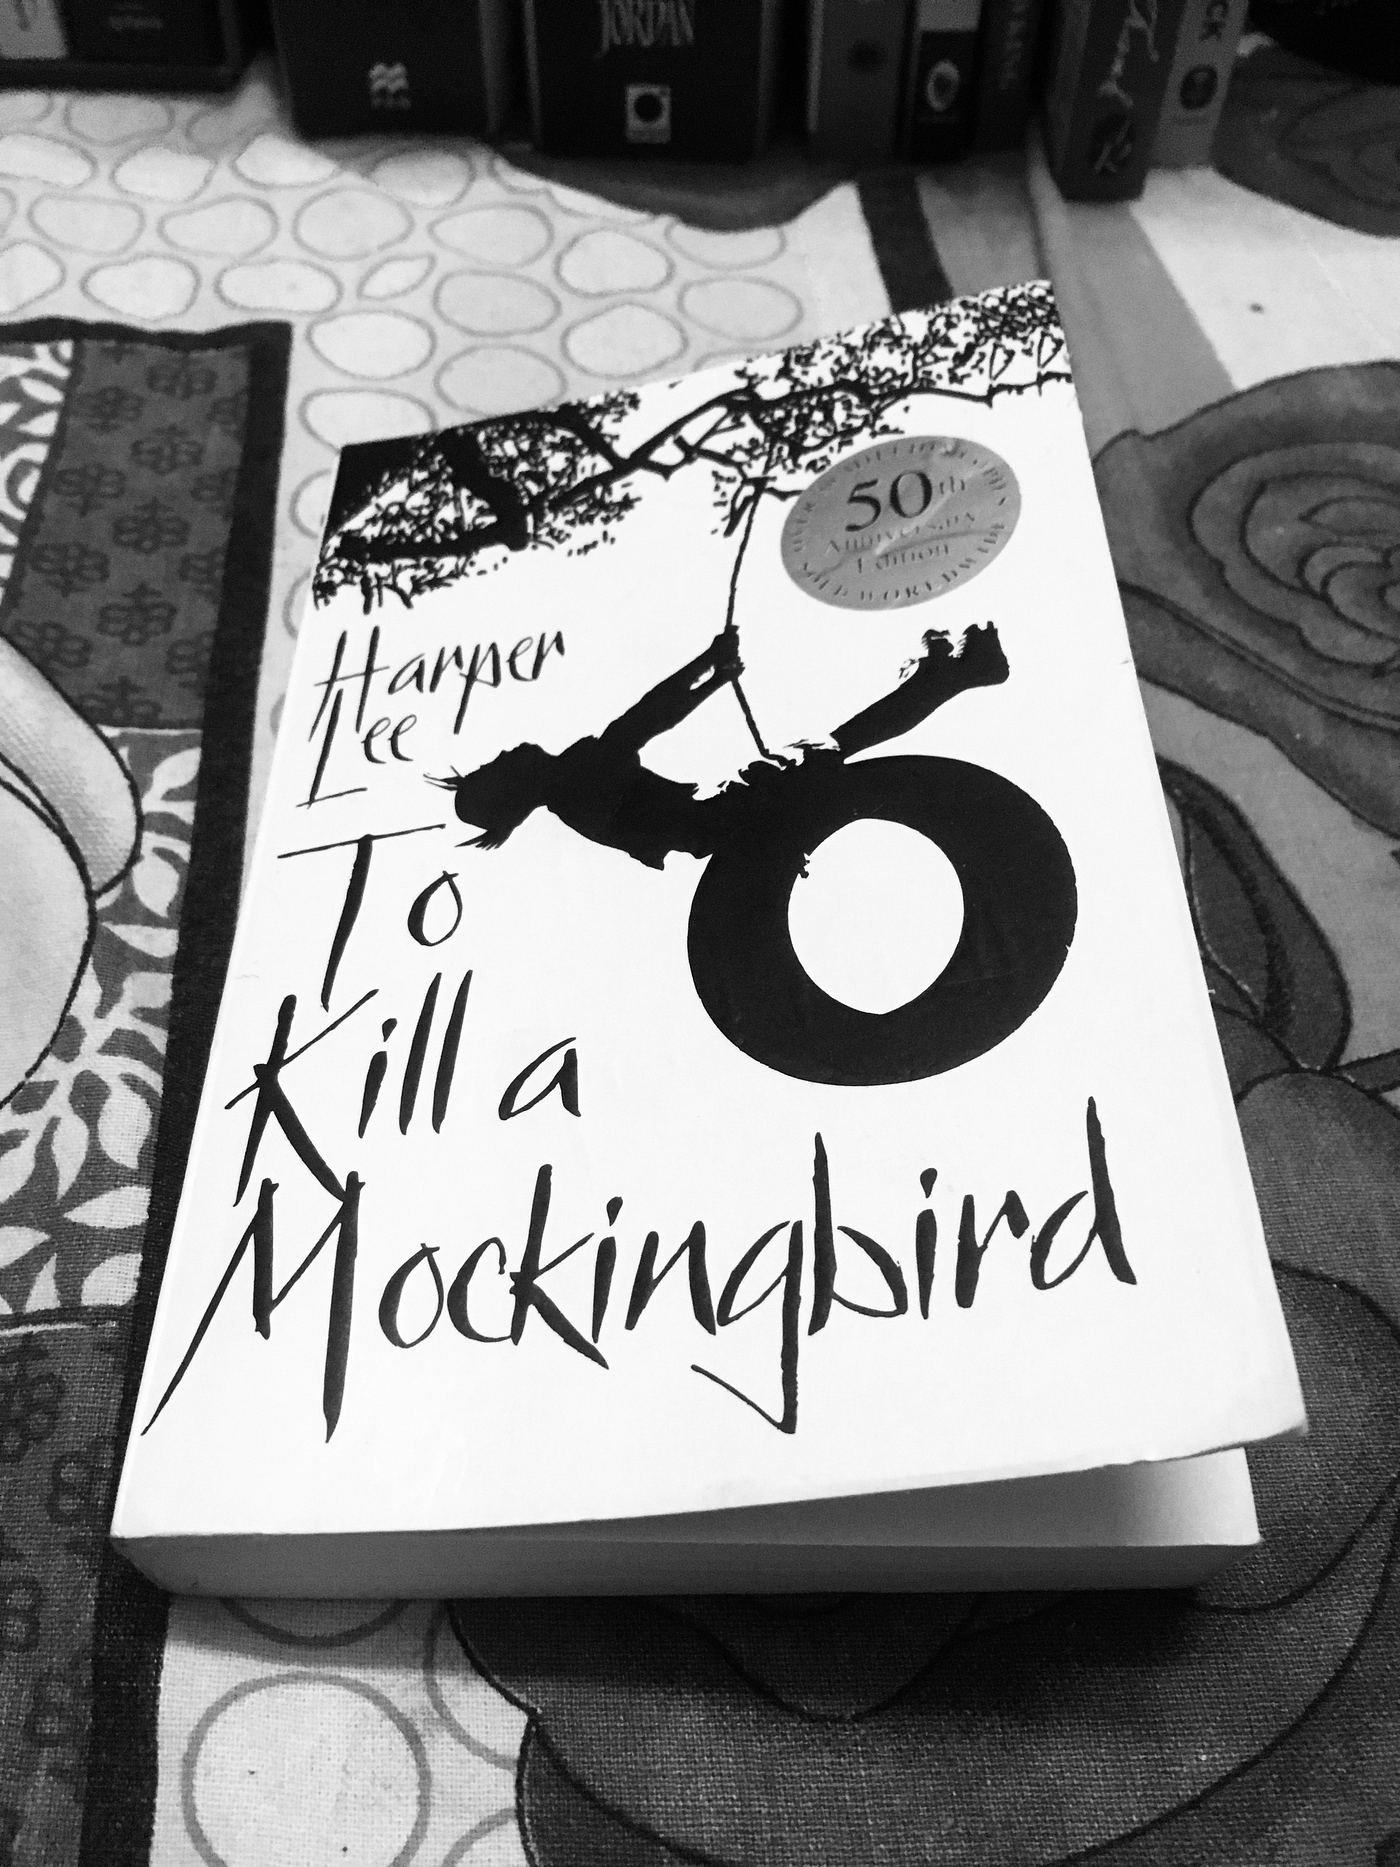 To Kill a Mockingbird, The book lovers Wiki